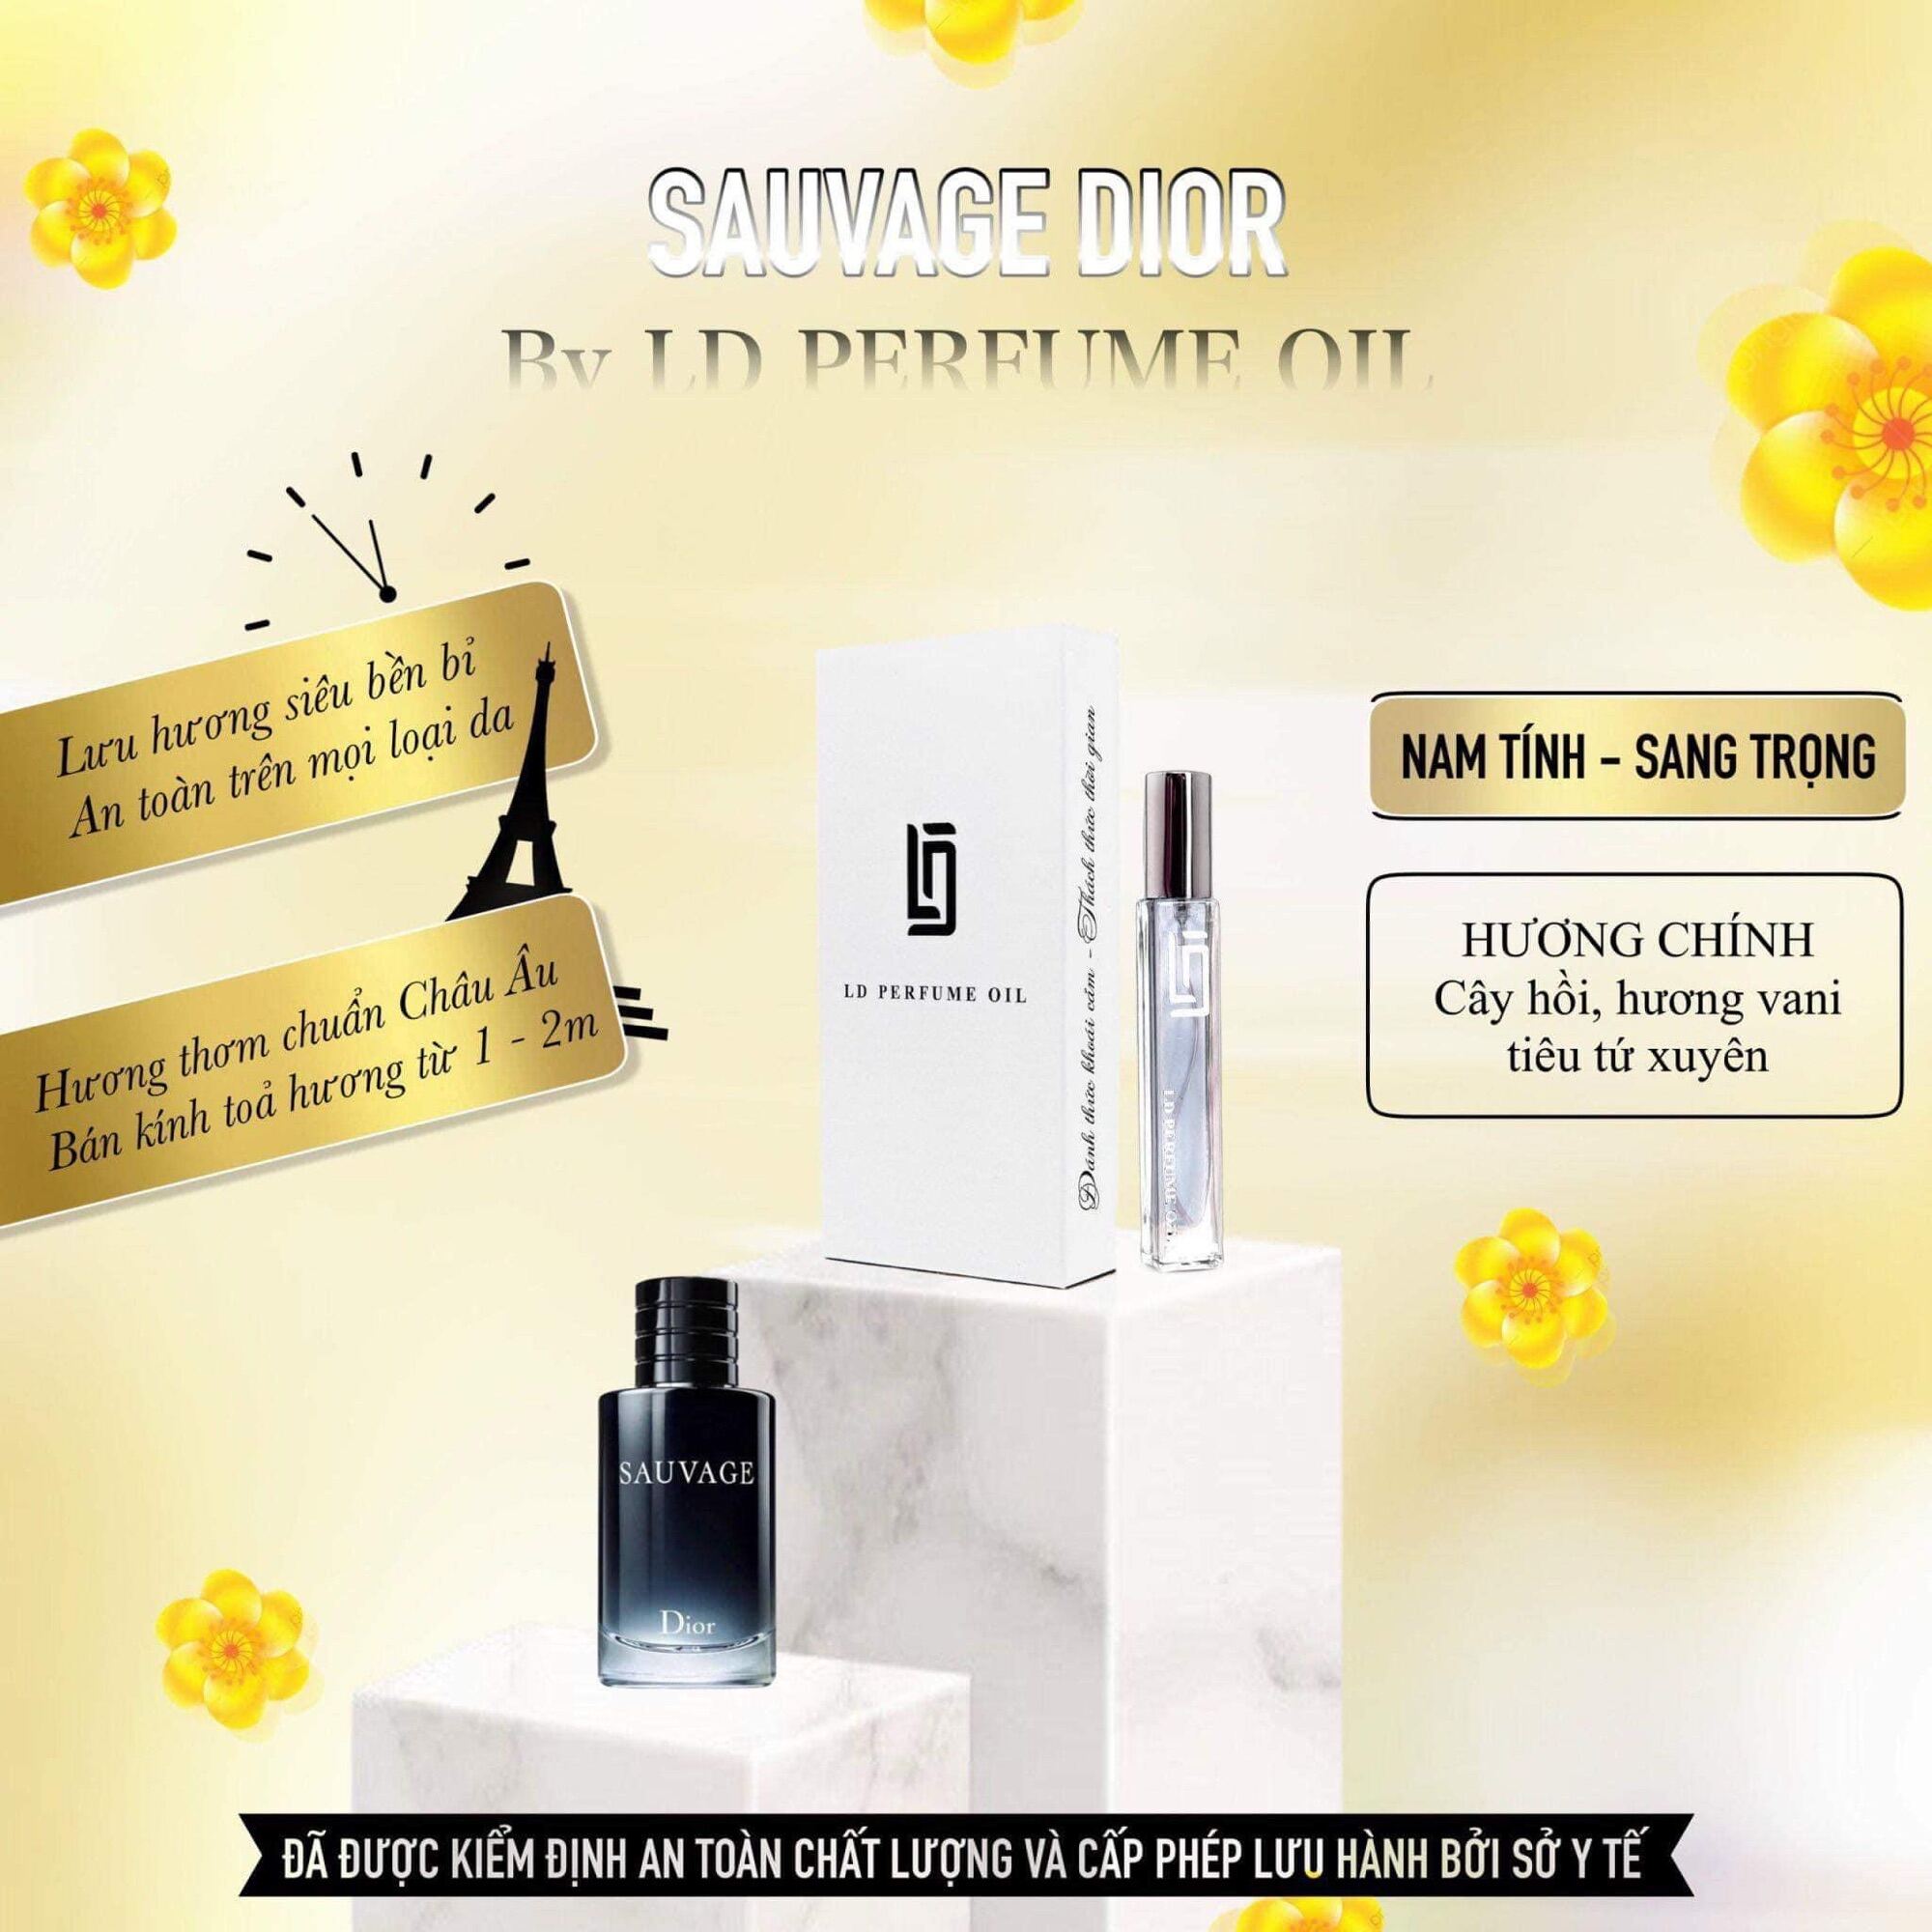 Mua Nước Hoa Nam Dior Sauvage Parfum 100ml  Dior  Mua tại Vua Hàng Hiệu  h027351